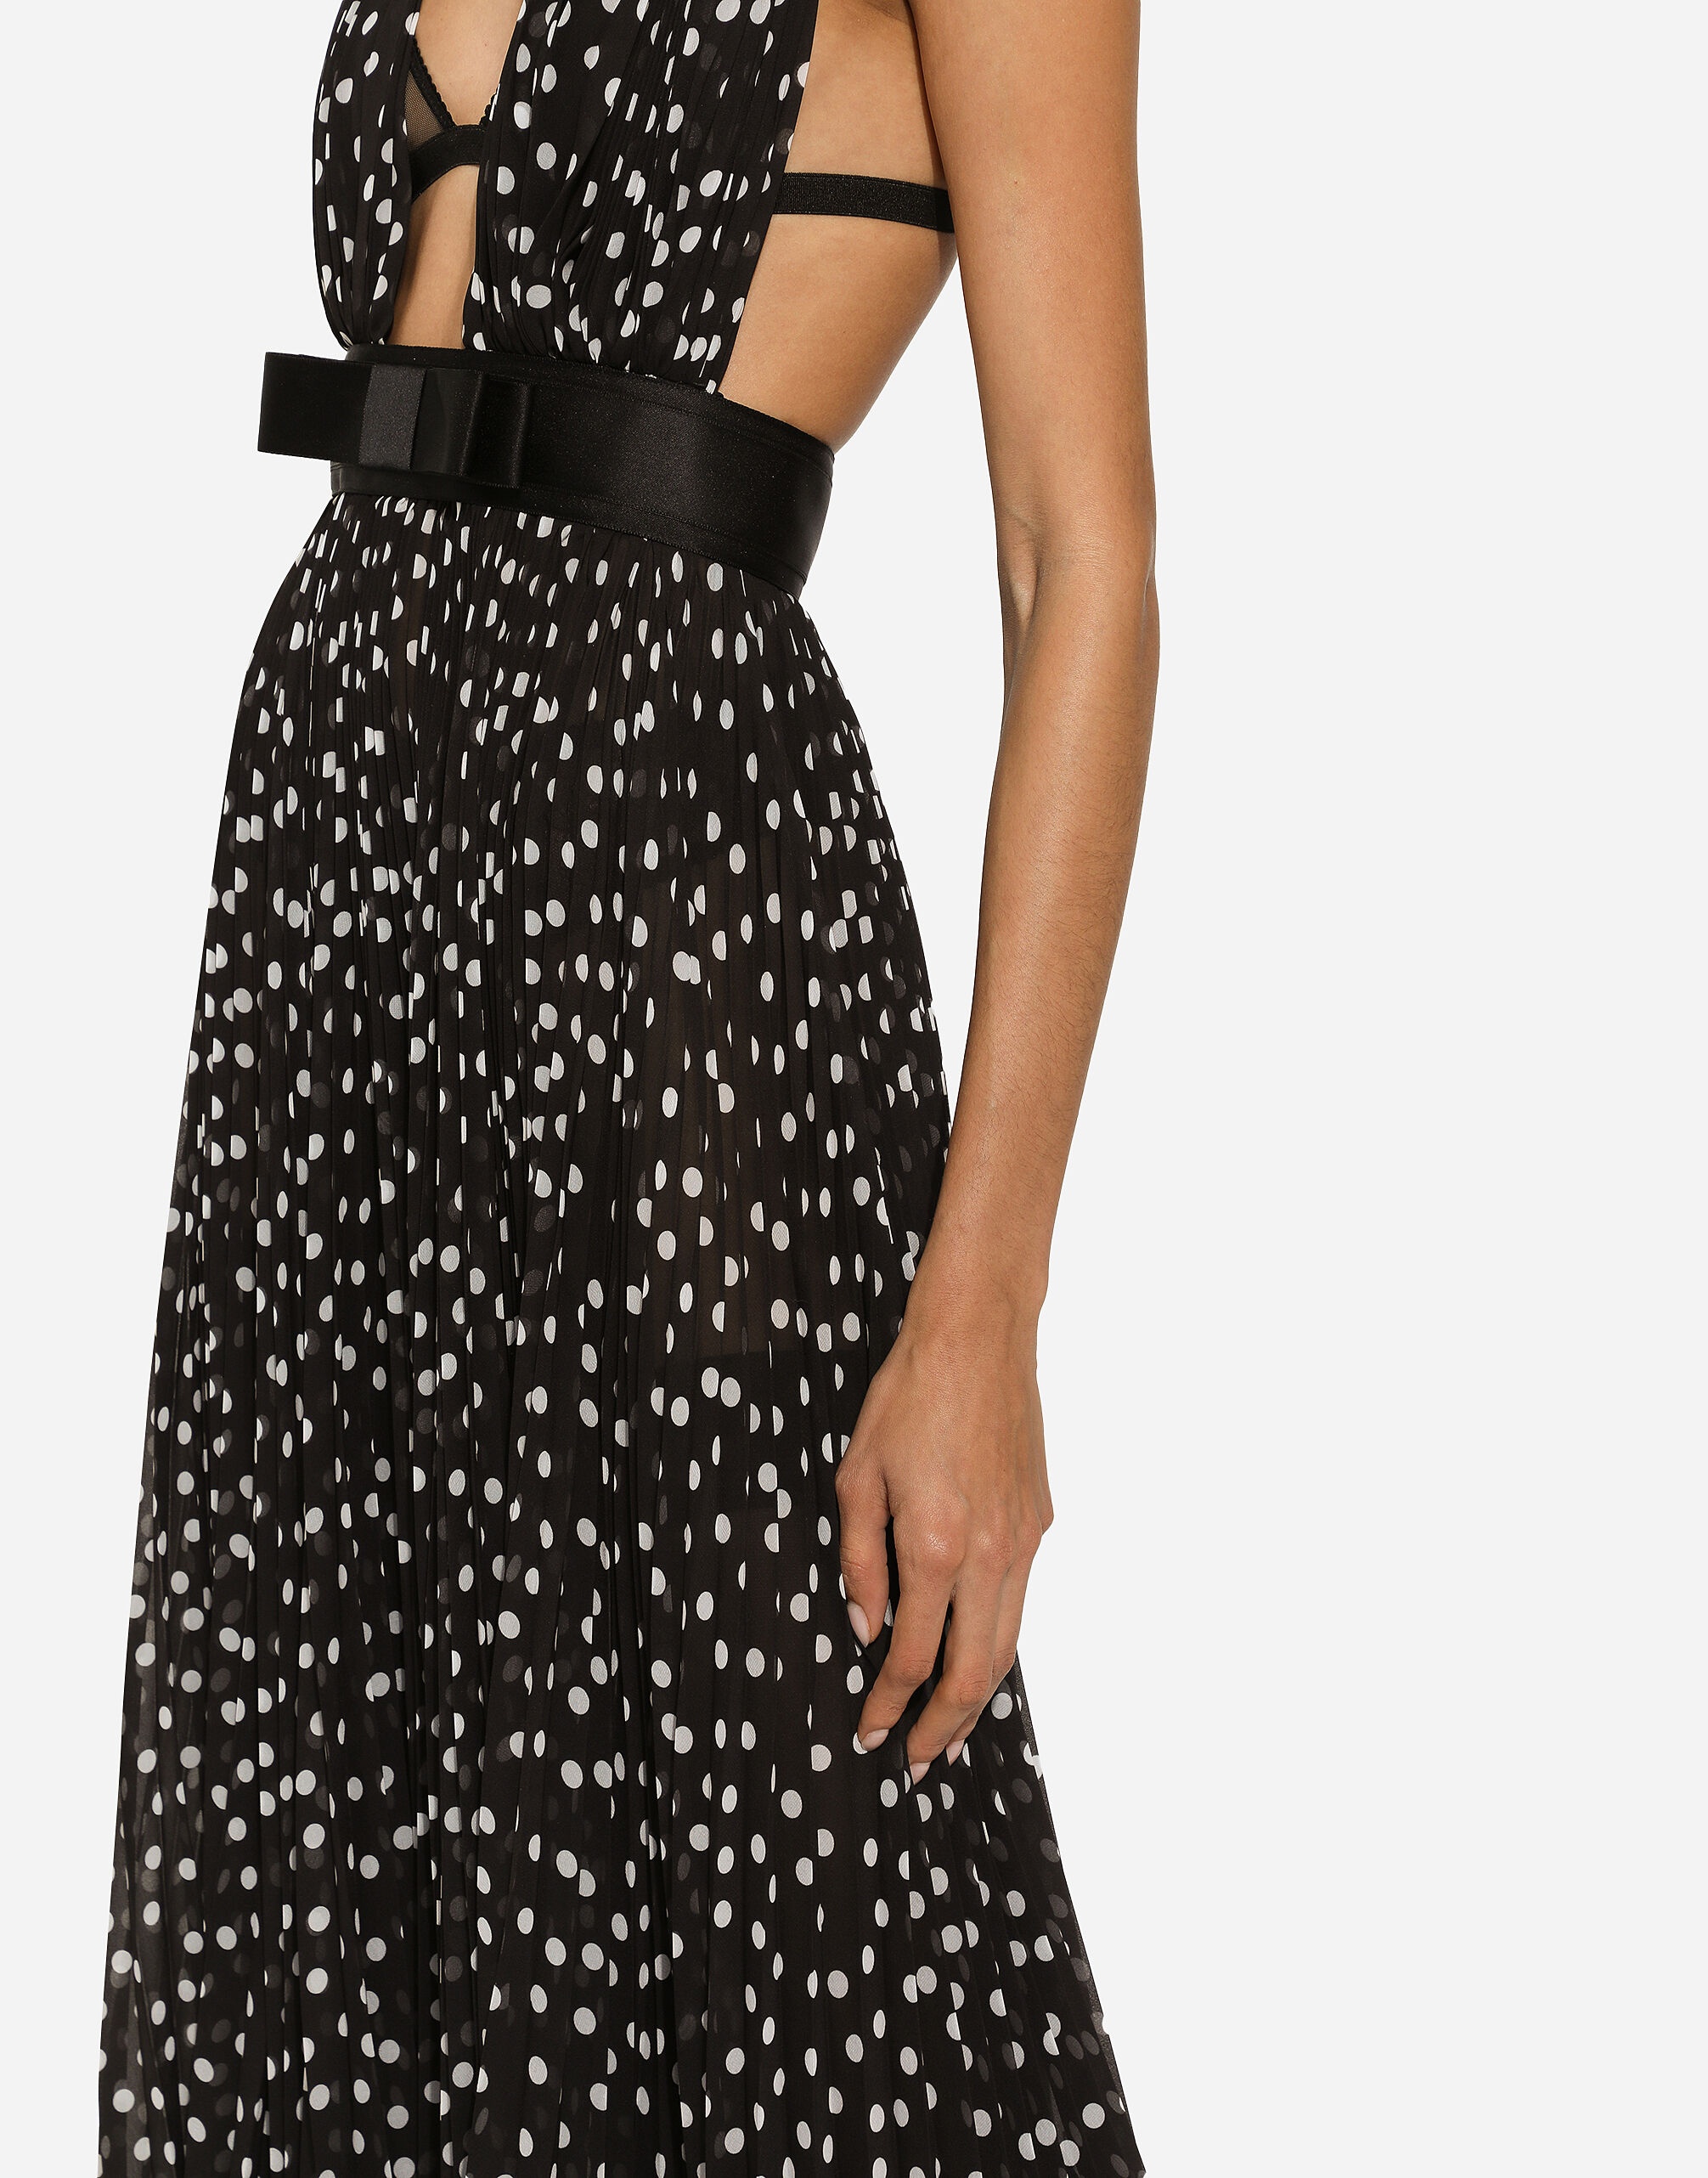 Chiffon calf-length dress with plunging neckline and polka-dot print - 8